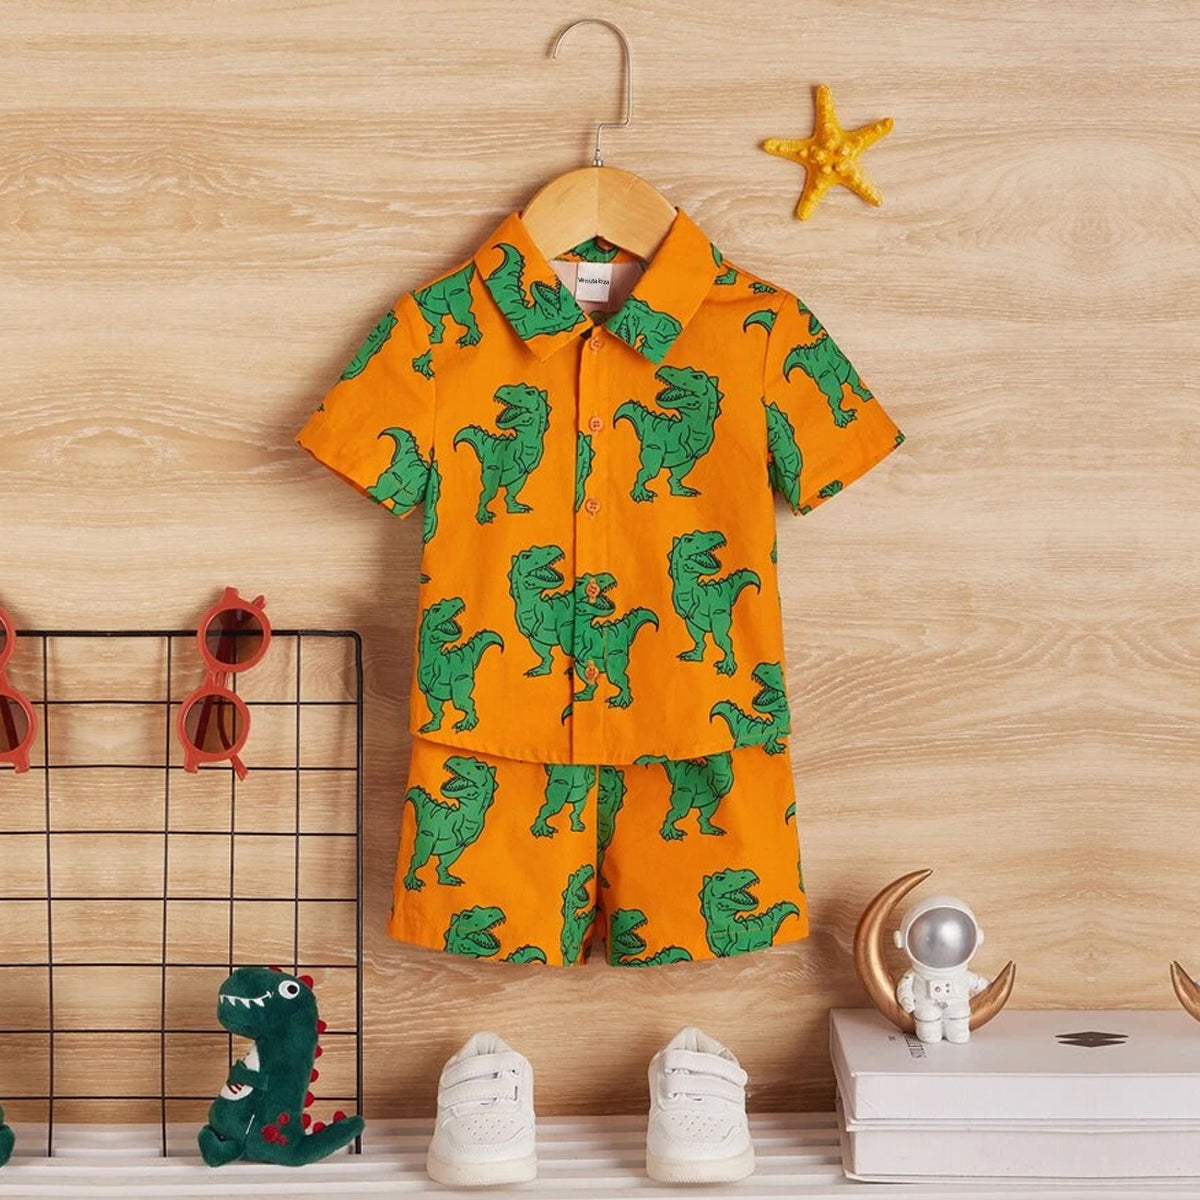 Venutaloza Baby Set Rainbow & Dinosaur(Combo Pack Of 2) Shirt & Shorts Without tee Two Piece Set For Boy & Girls.